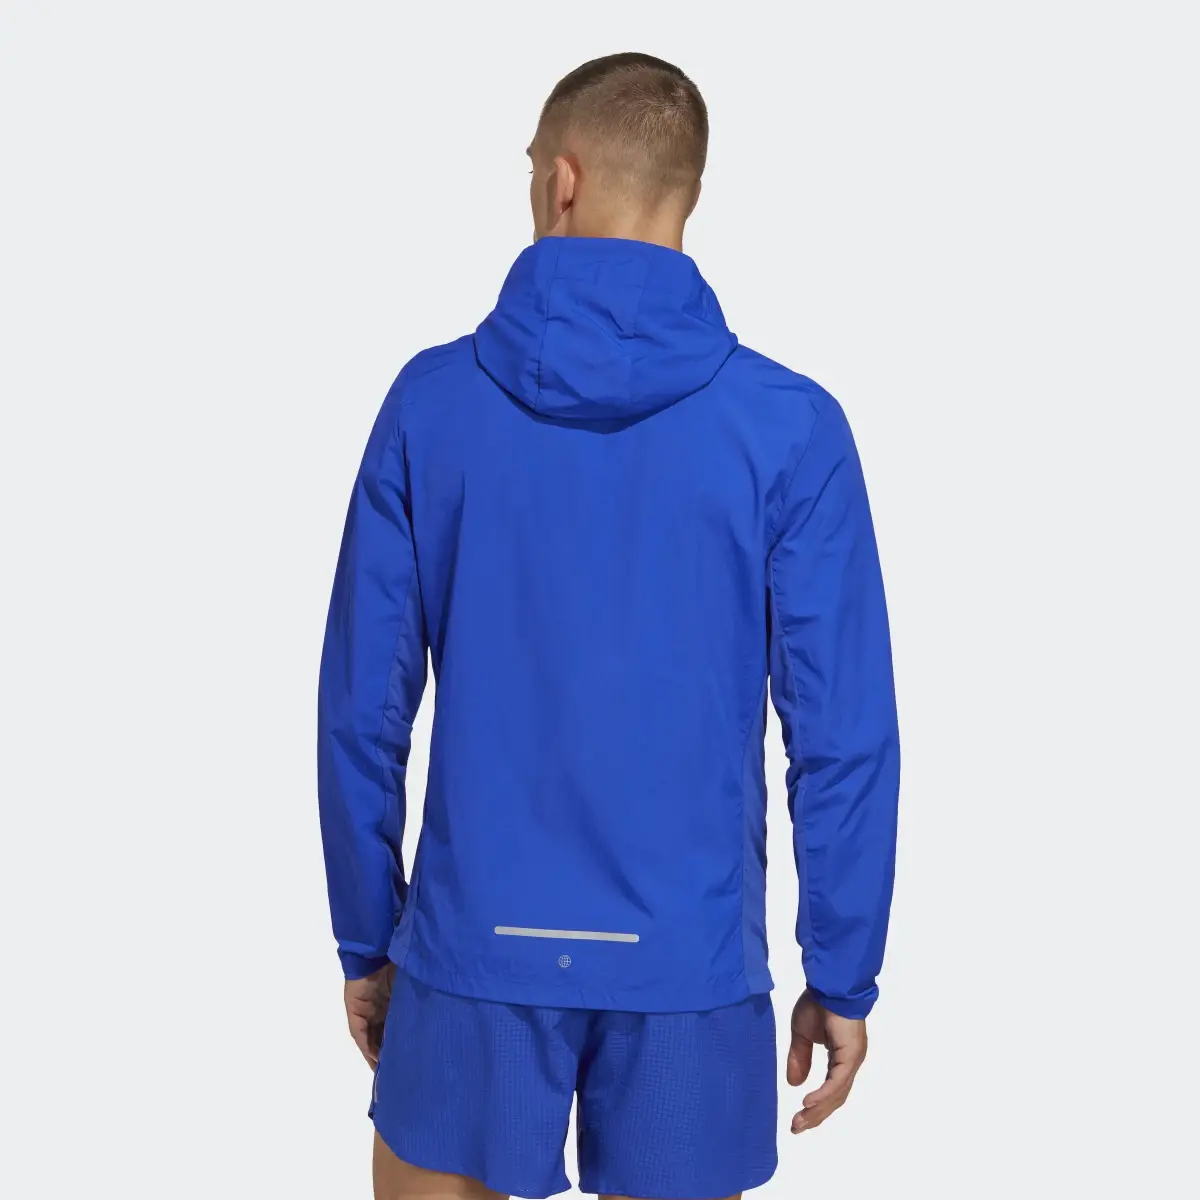 Adidas Marathon Warm-Up Running Jacket. 3